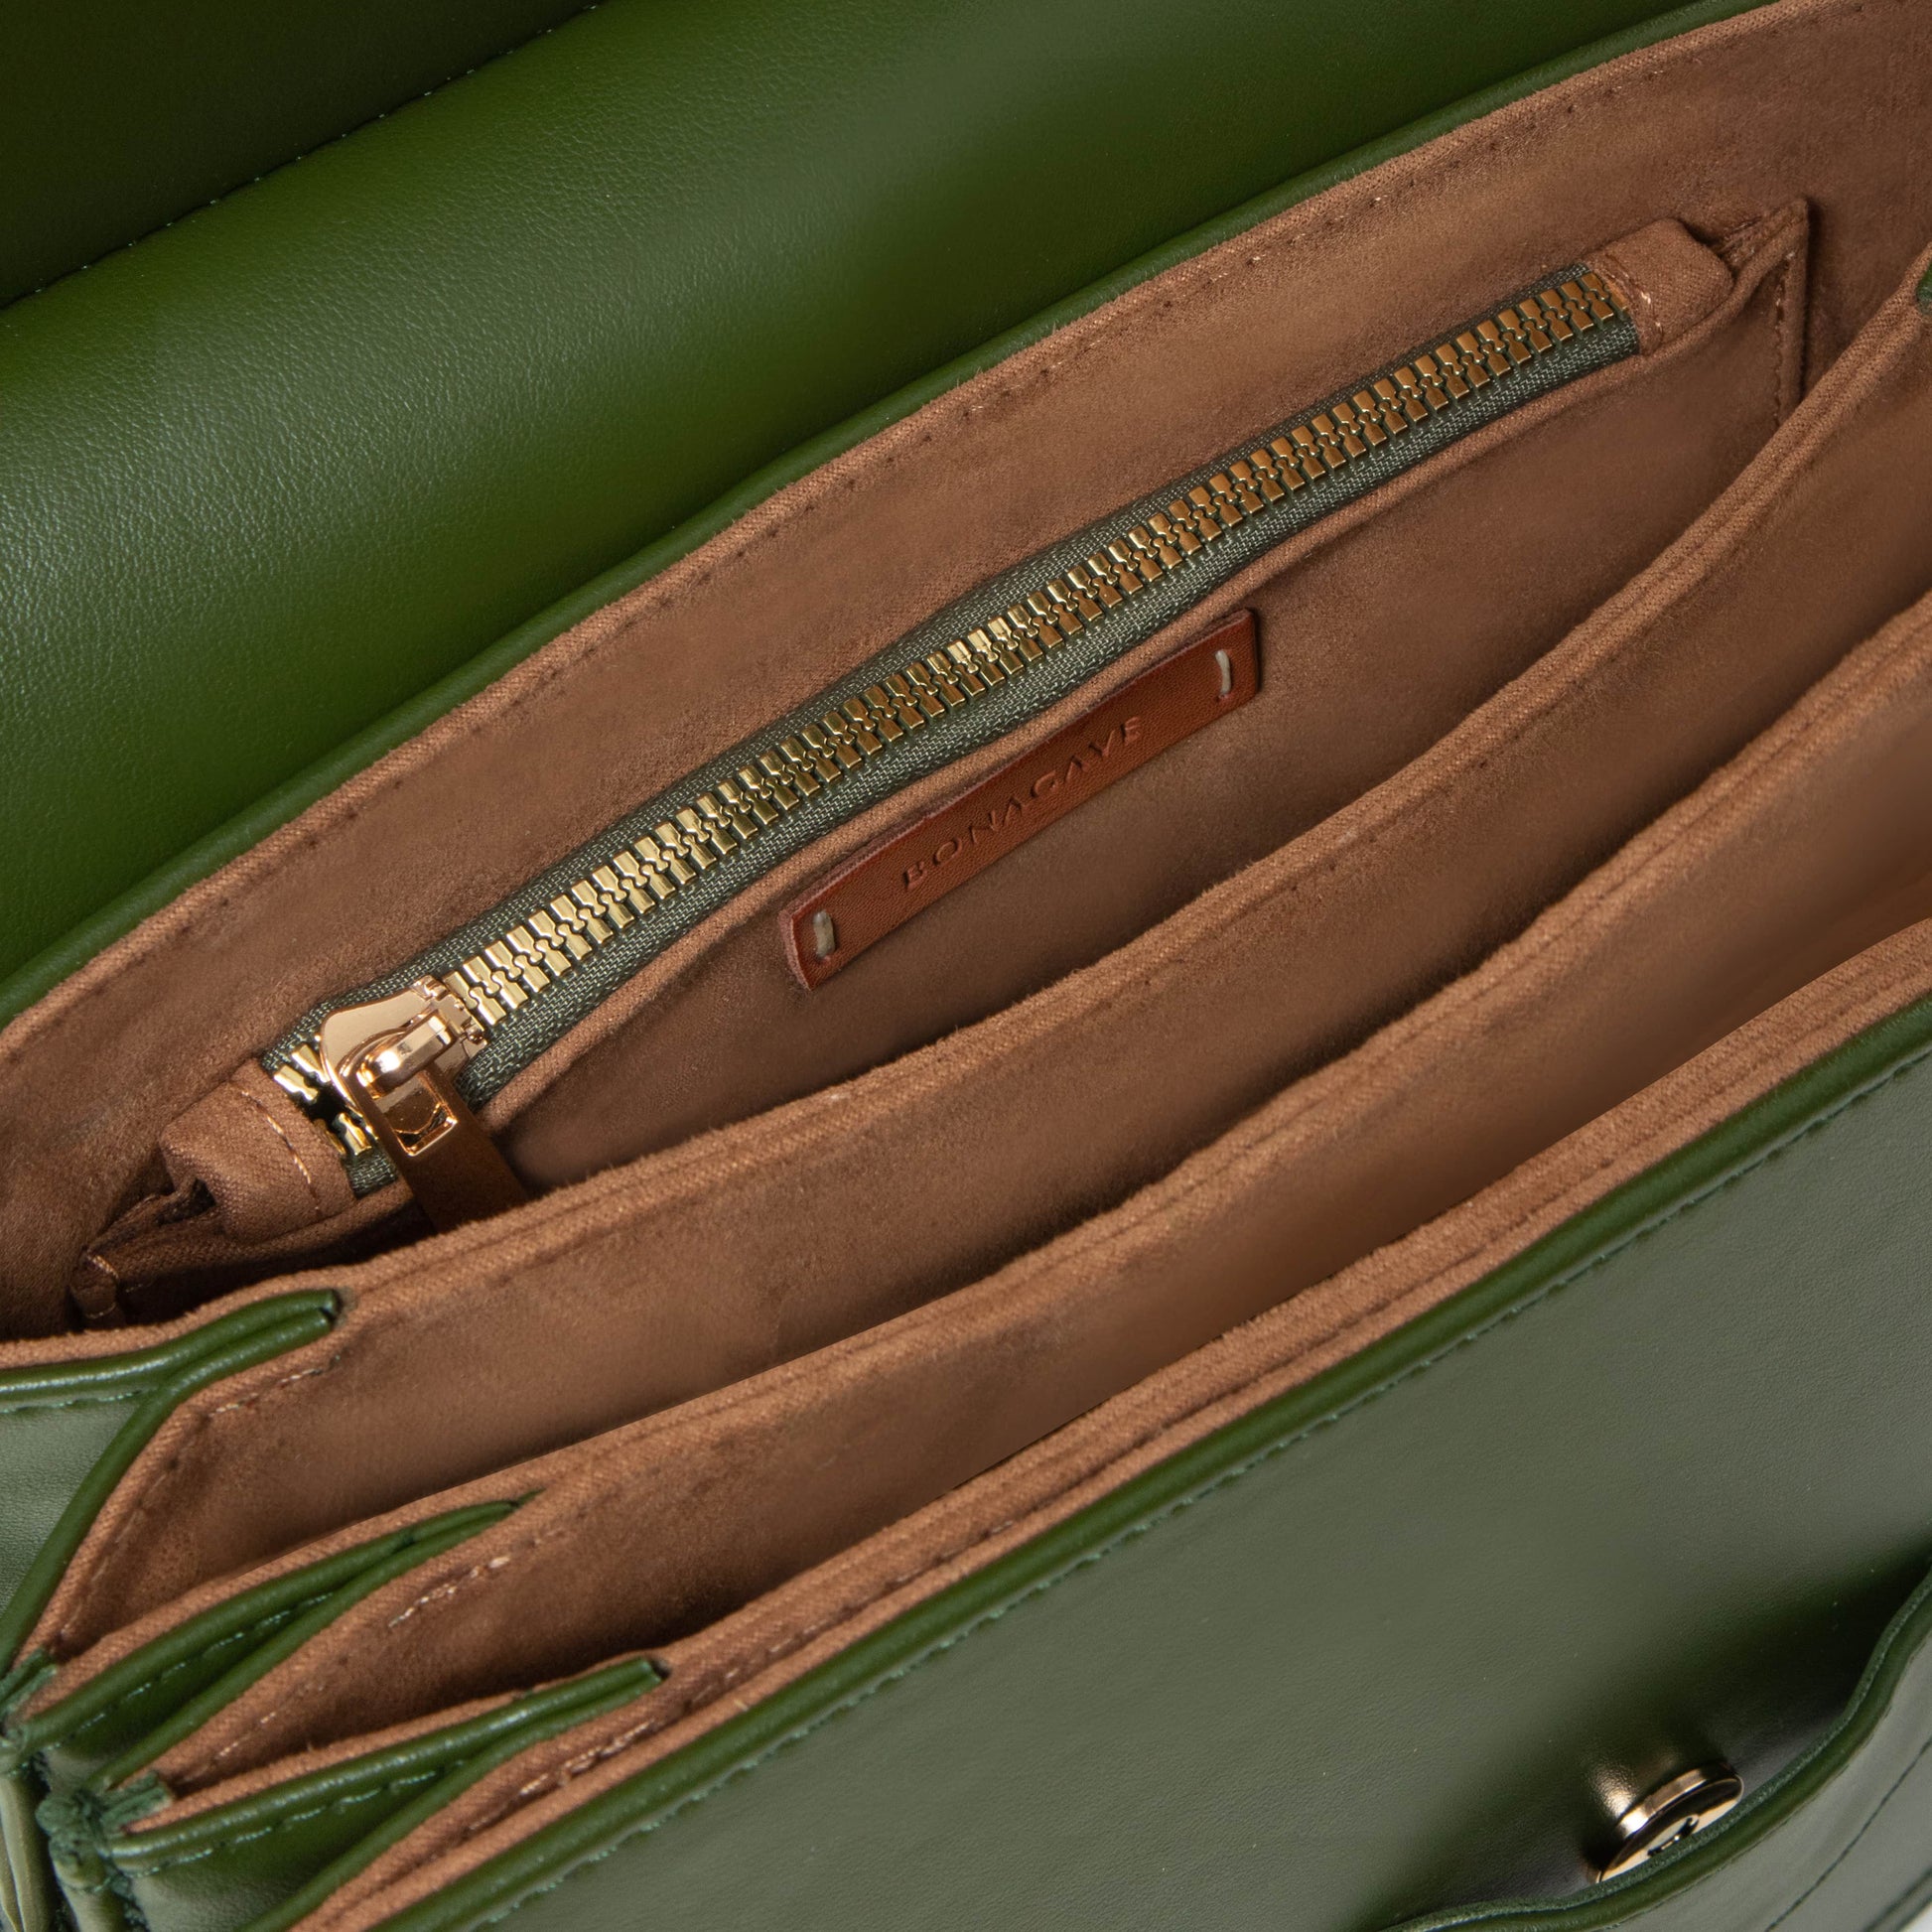 The Elizabeth Cactus Leather Handbag (Green)